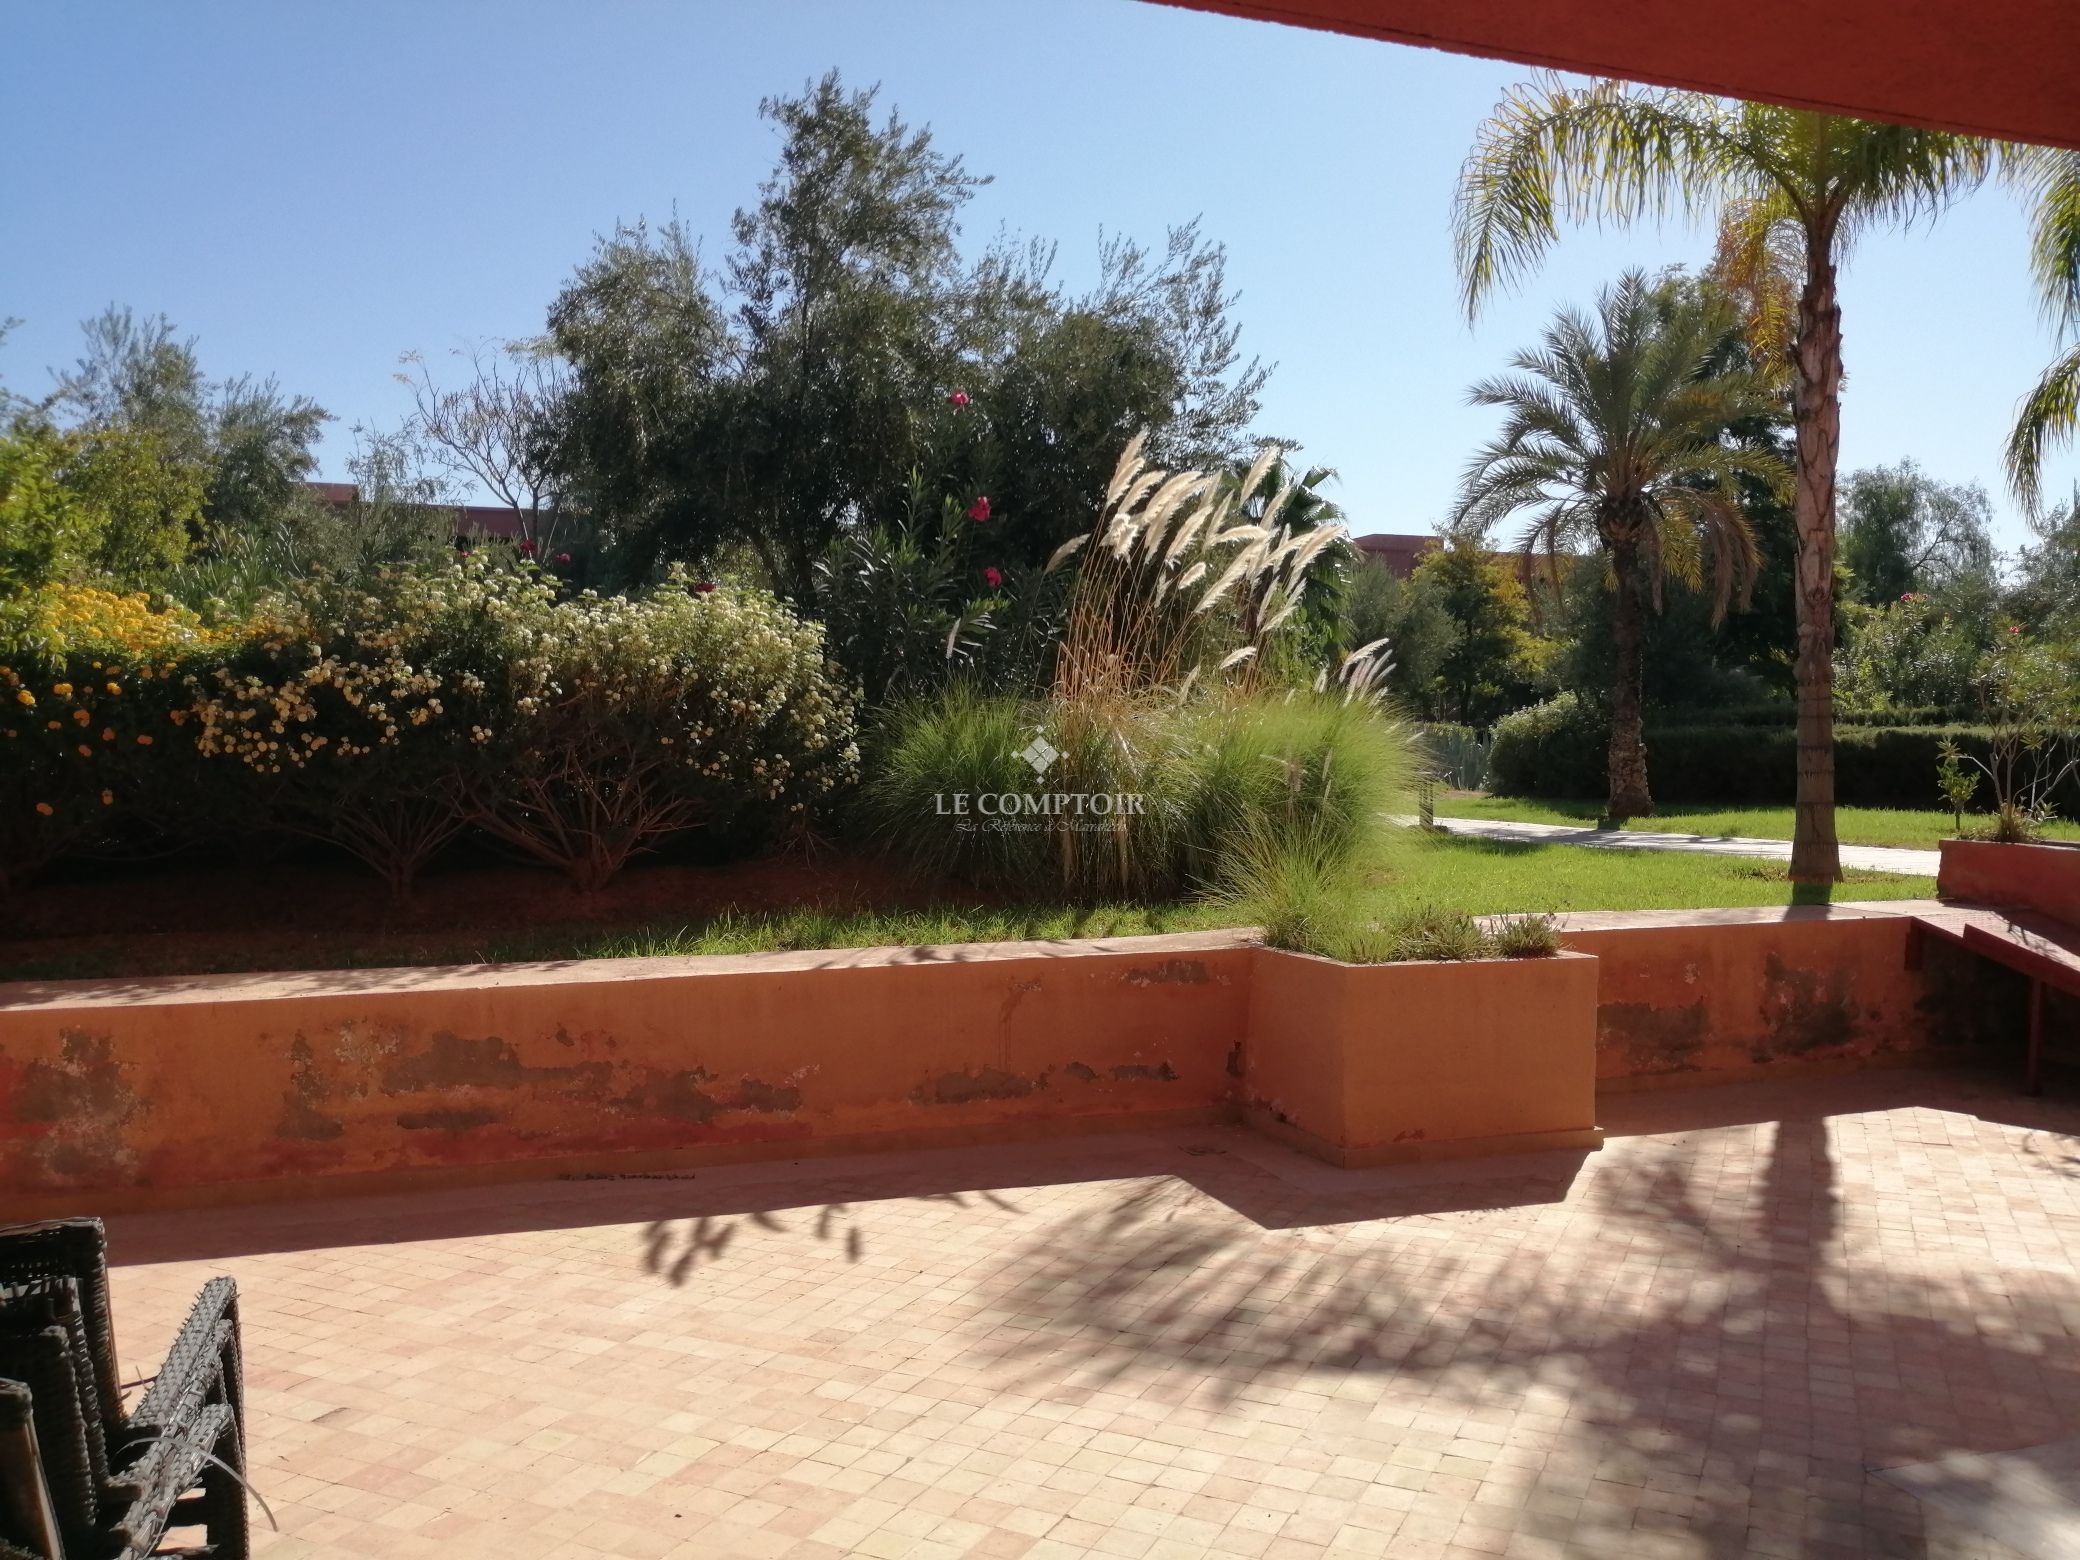 Le Comptoir Immobilier Agence Immobiliere Marrakech Appartement Amelkis Jardin Piscine Terrasse 10